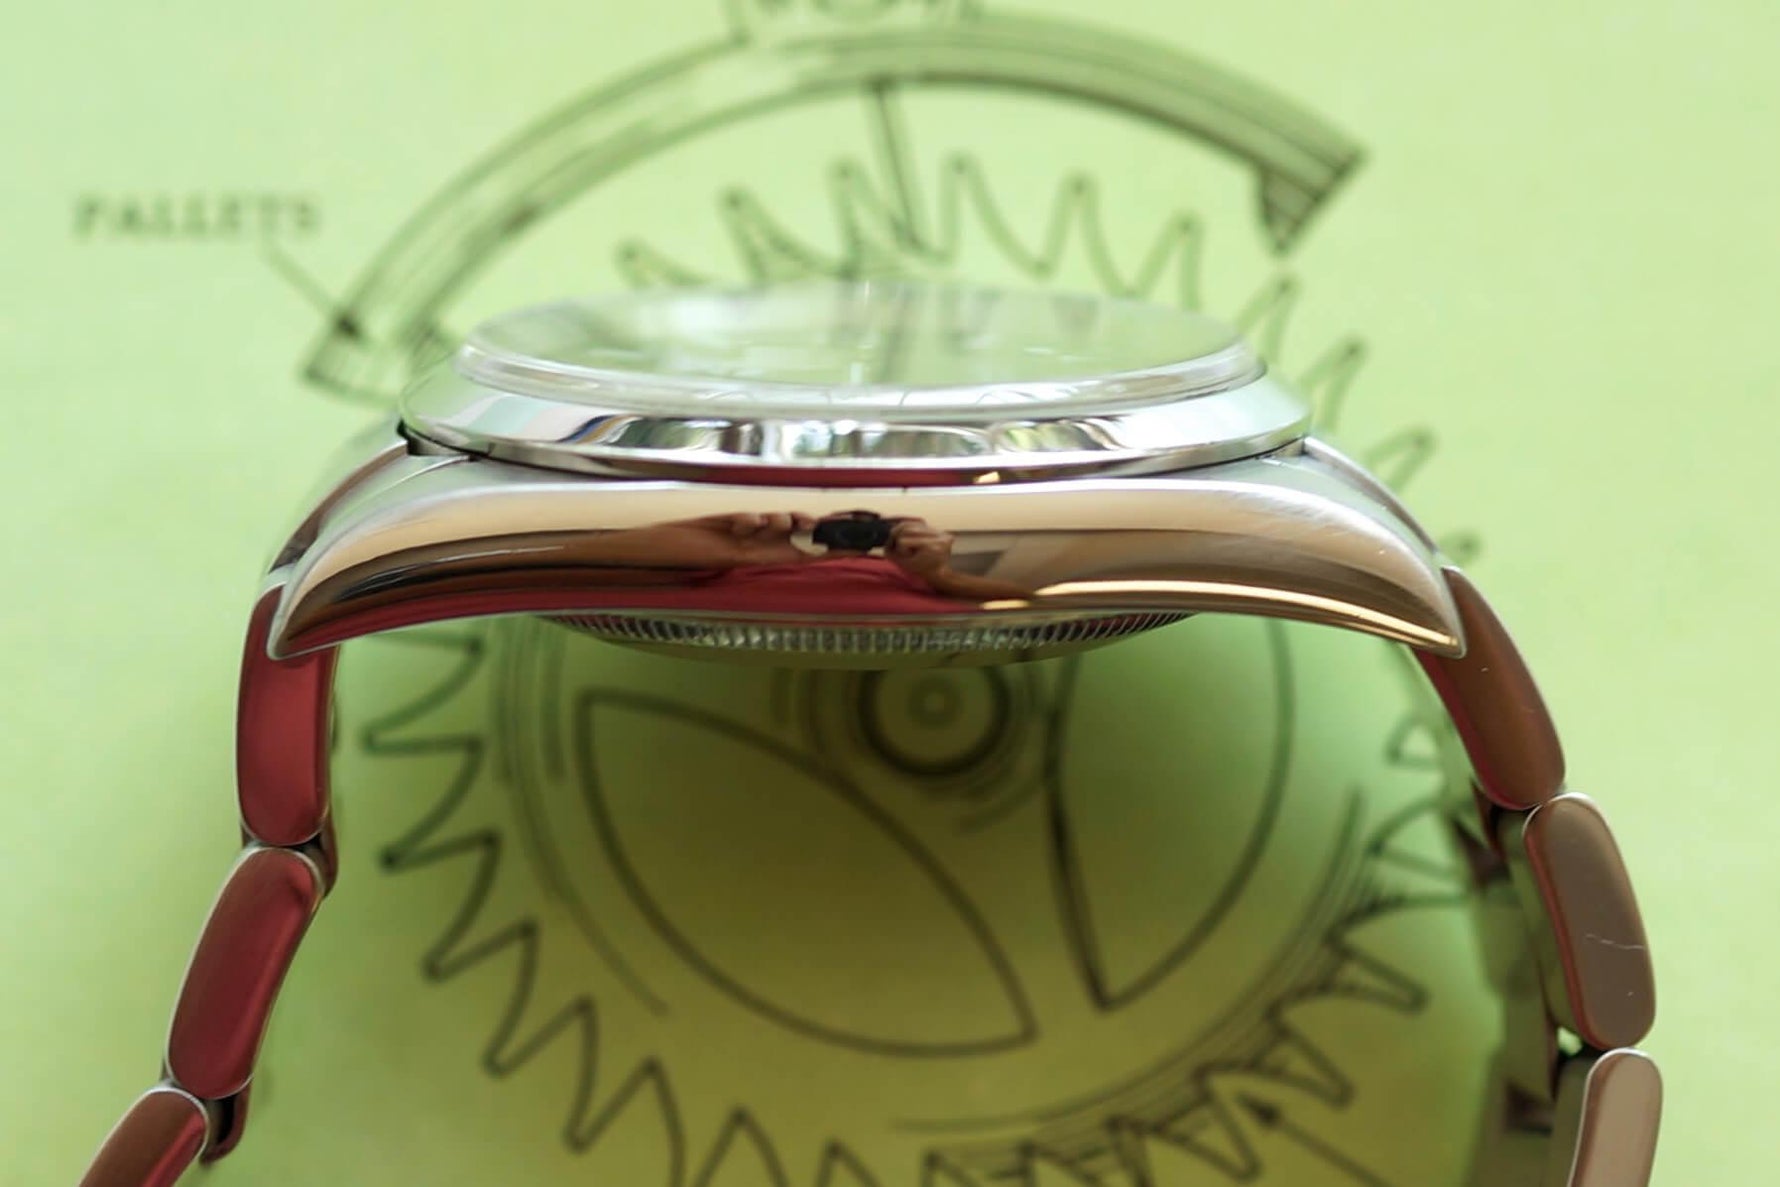 2004 Rolex Explorer 114270 36mm F serial - WearingTime Luxury Watches